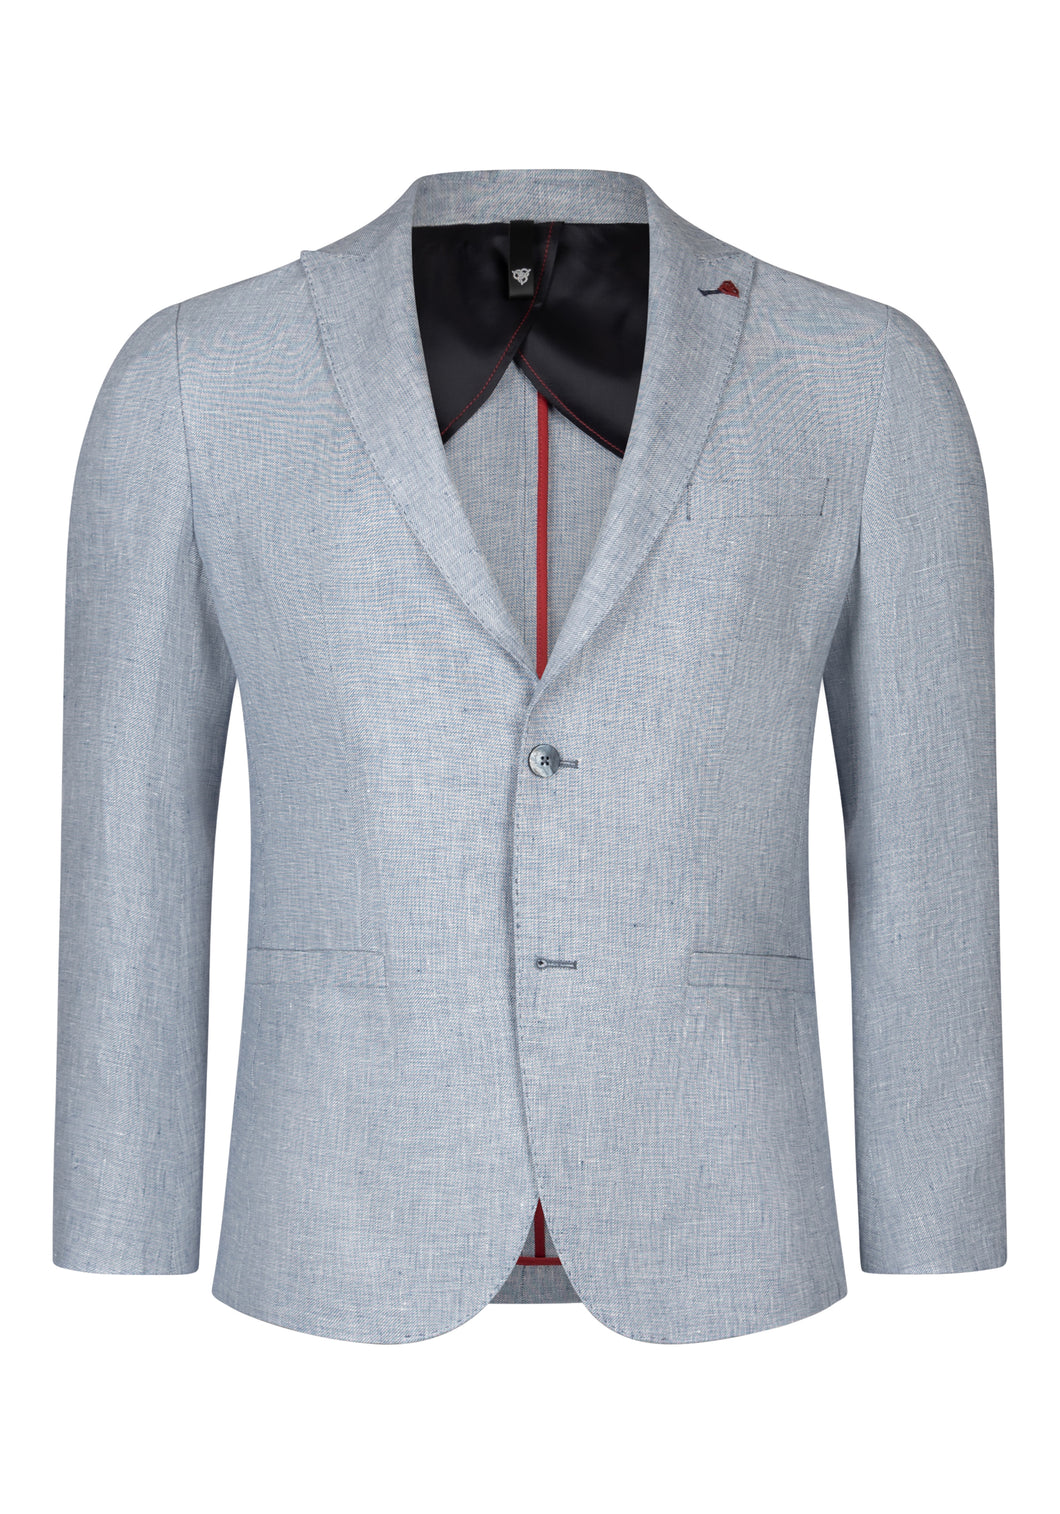 ROY ROBSON Slim Fit Linen Jacket in Light Blue 08500 2782